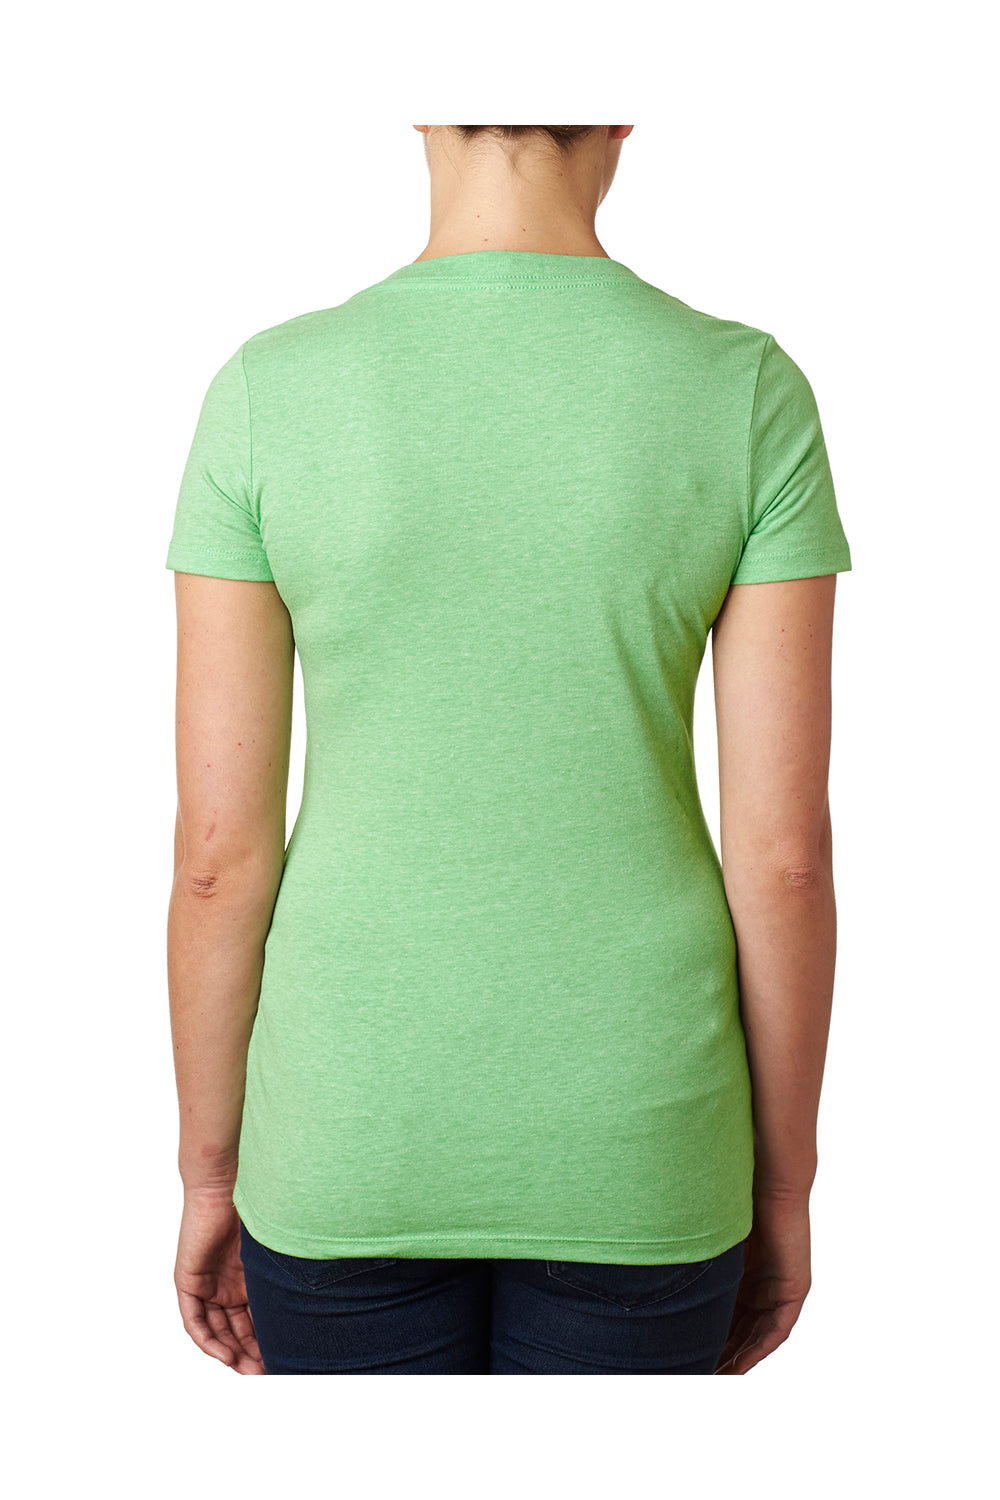 Next Level 6640 Womens CVC Jersey Short Sleeve V-Neck T-Shirt Apple Green Back